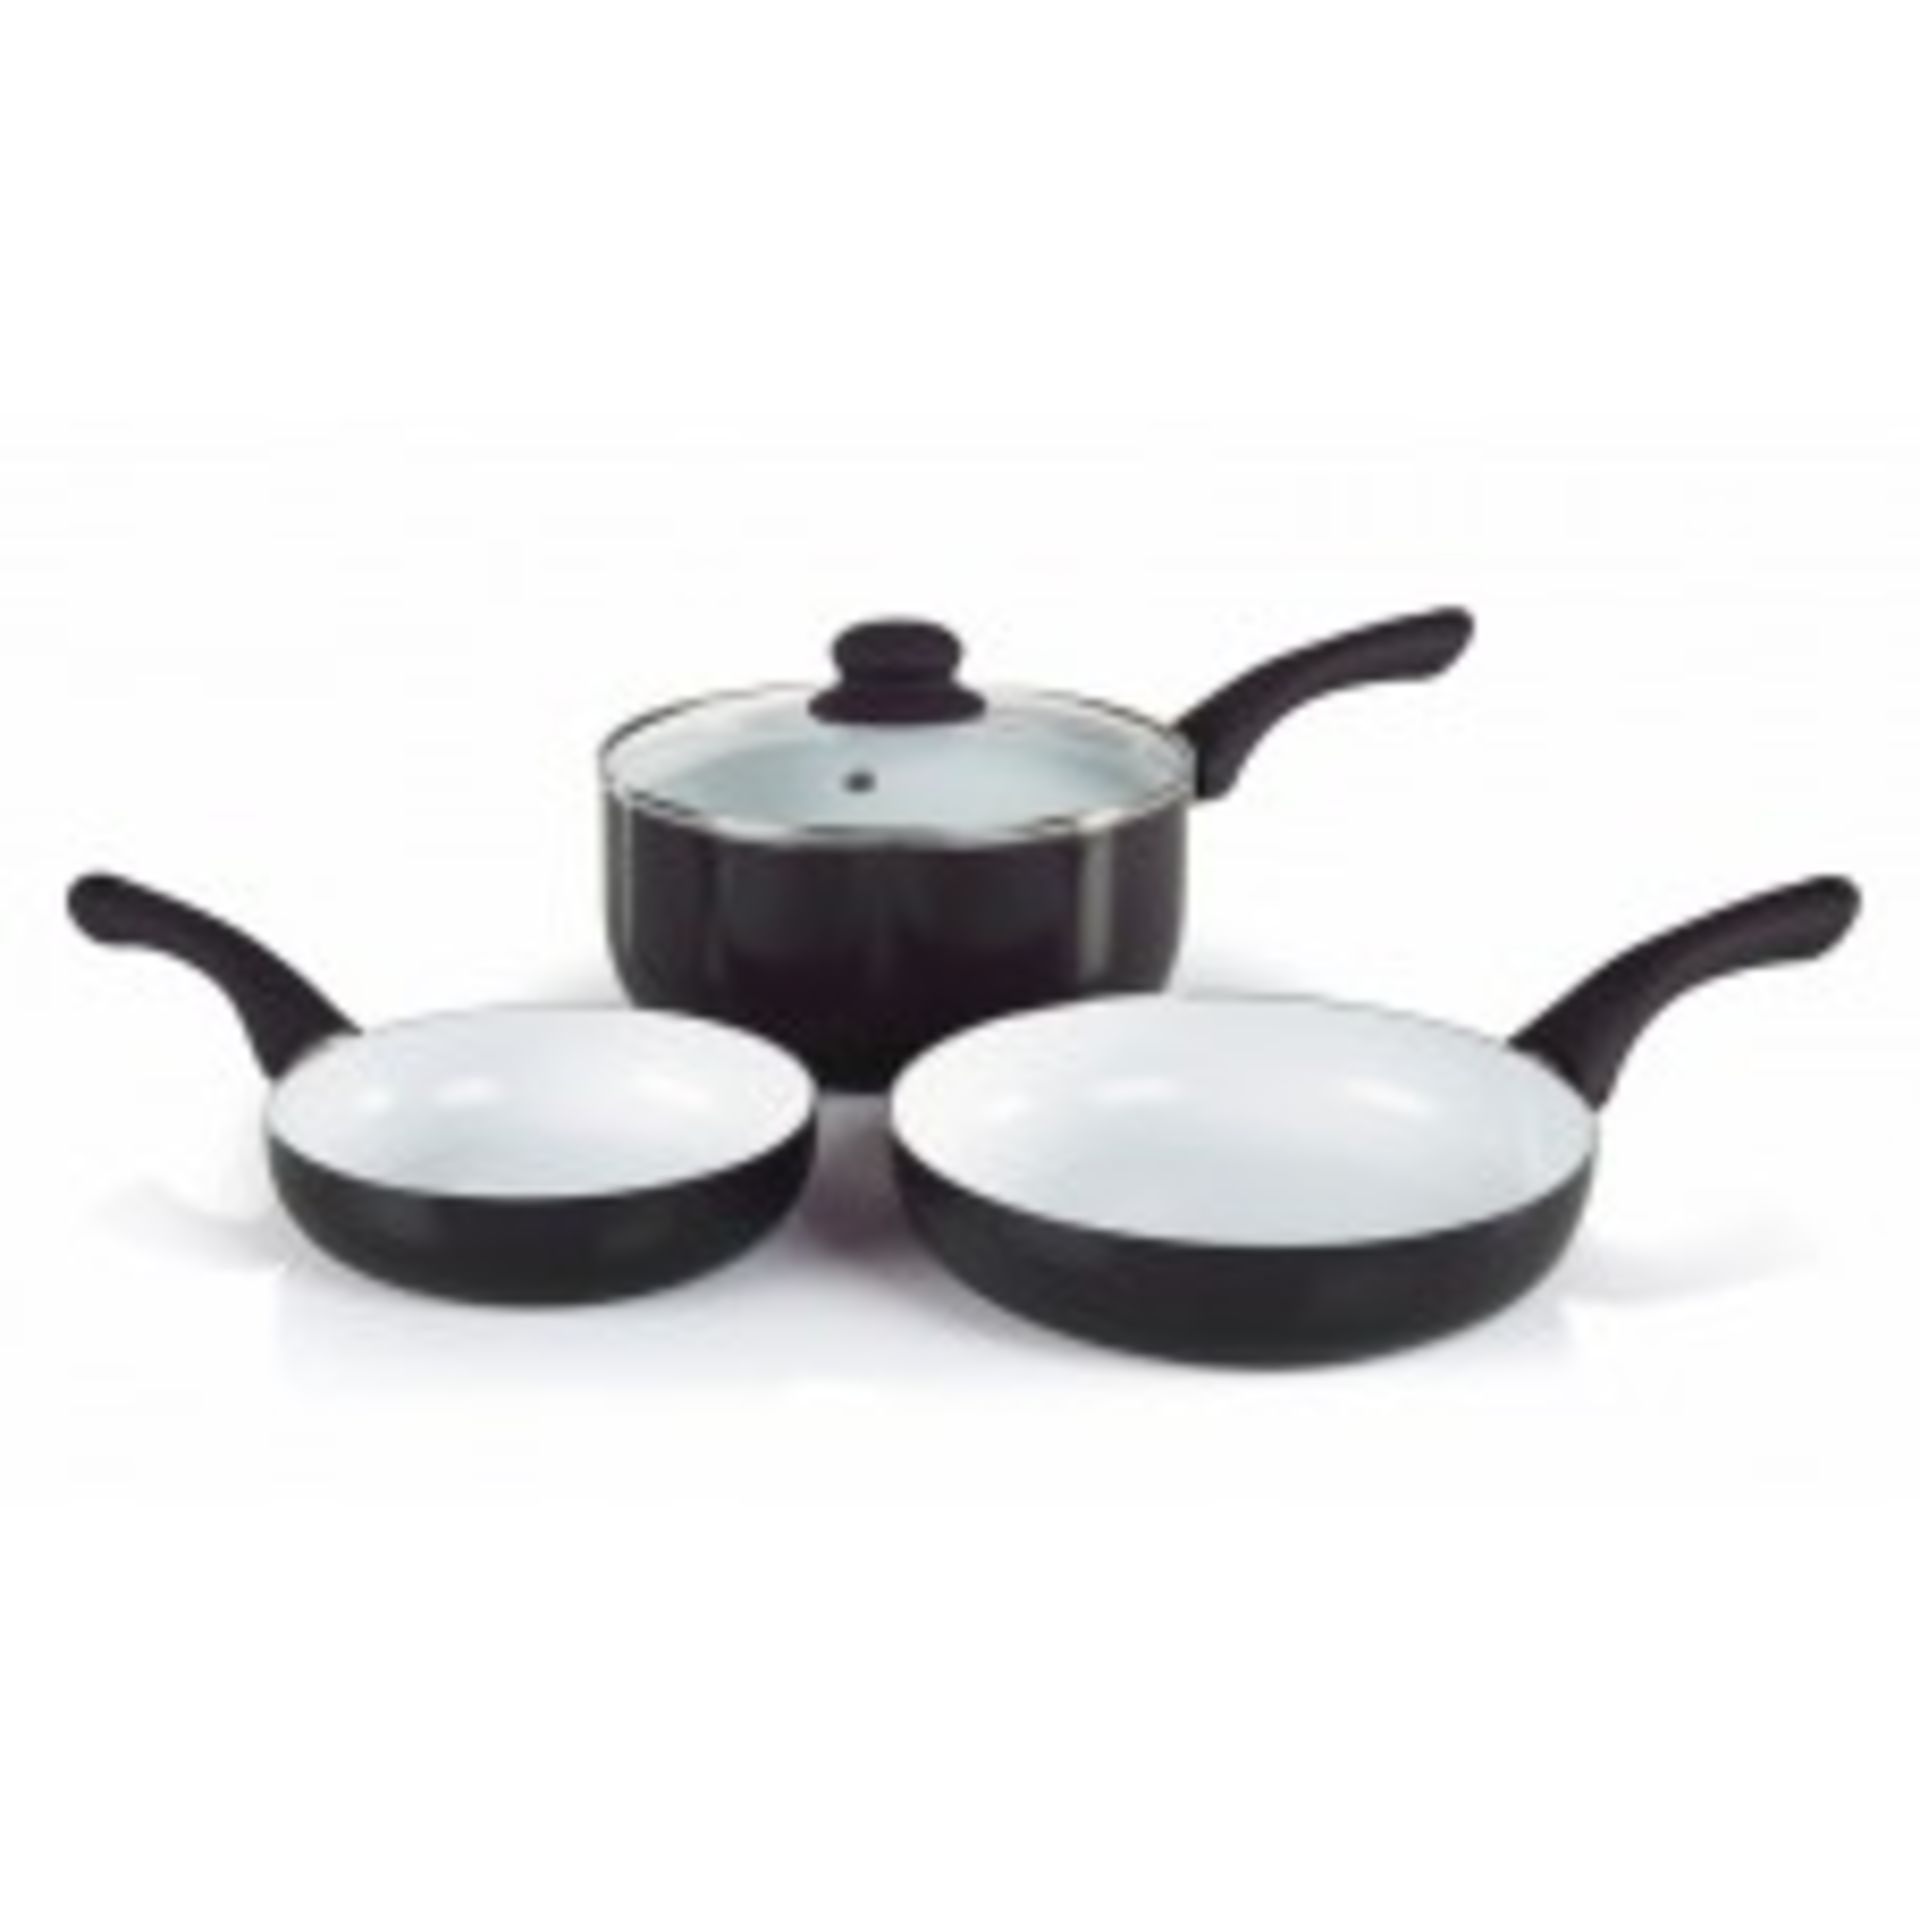 V *TRADE QTY* Brand New Black Four Piece Cermalon Ceramic Pan Set-16 & 20cm Fryingpans-20cm Saucepan